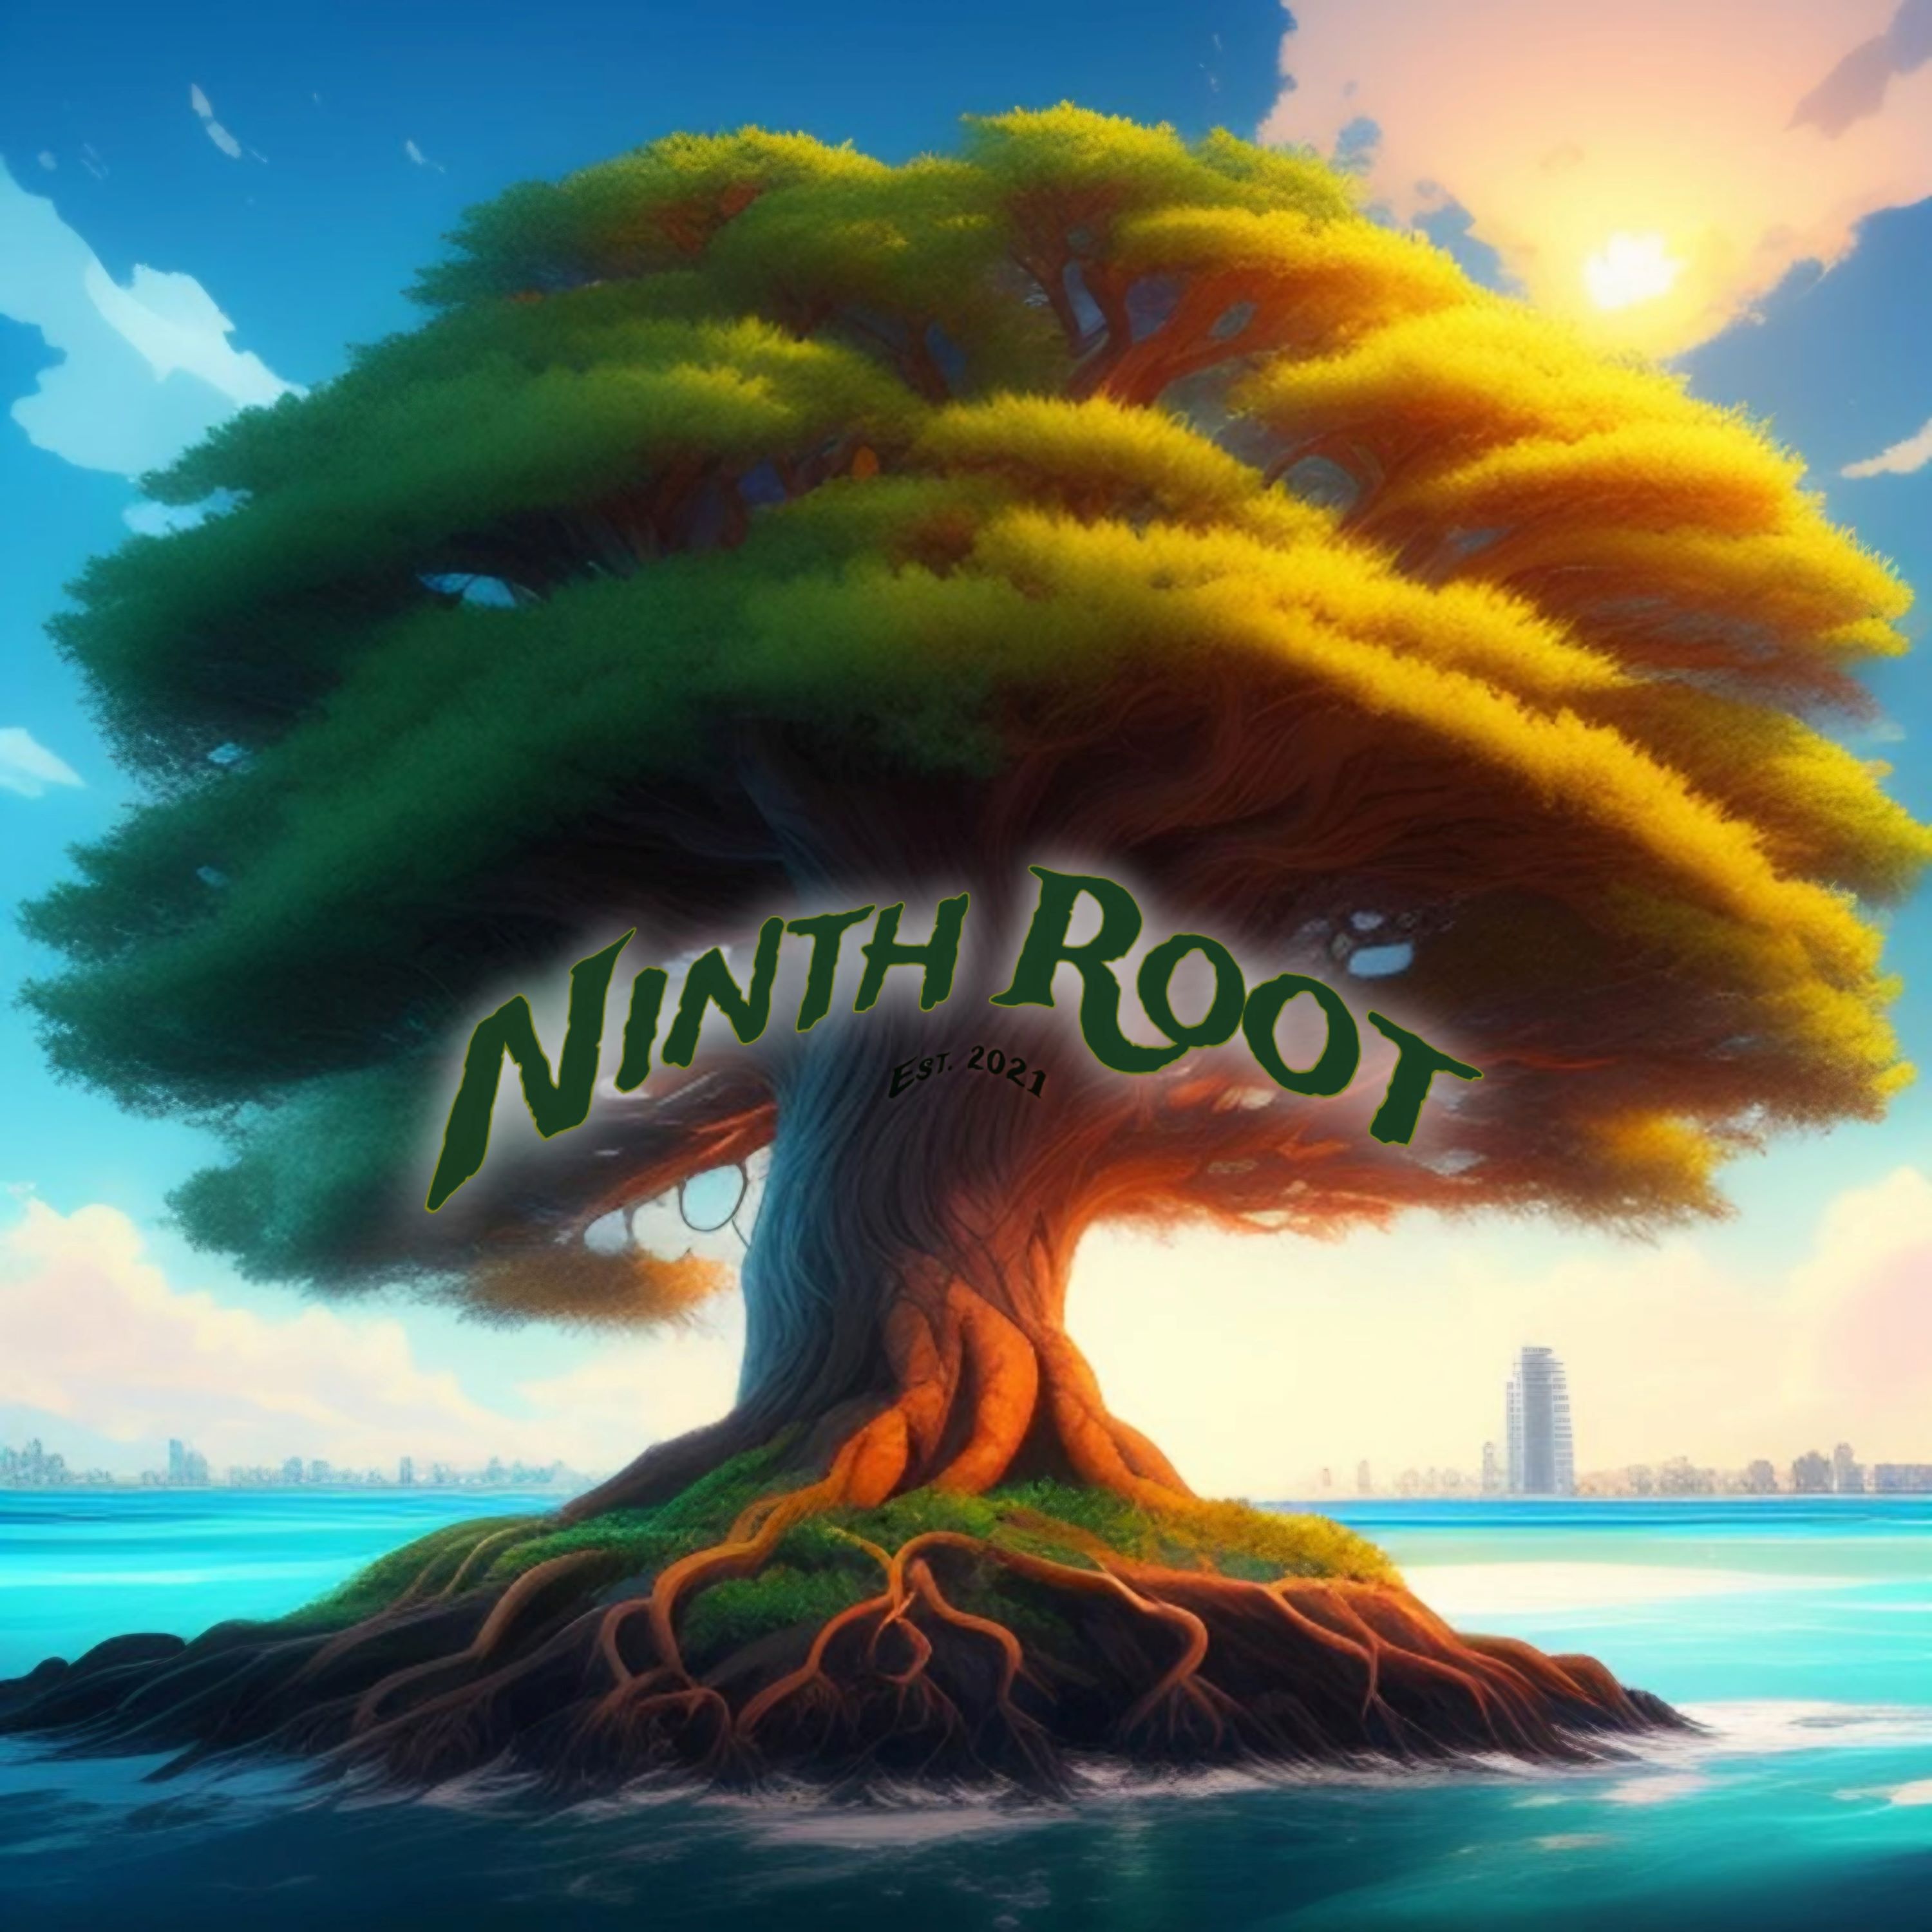 Ninth Root